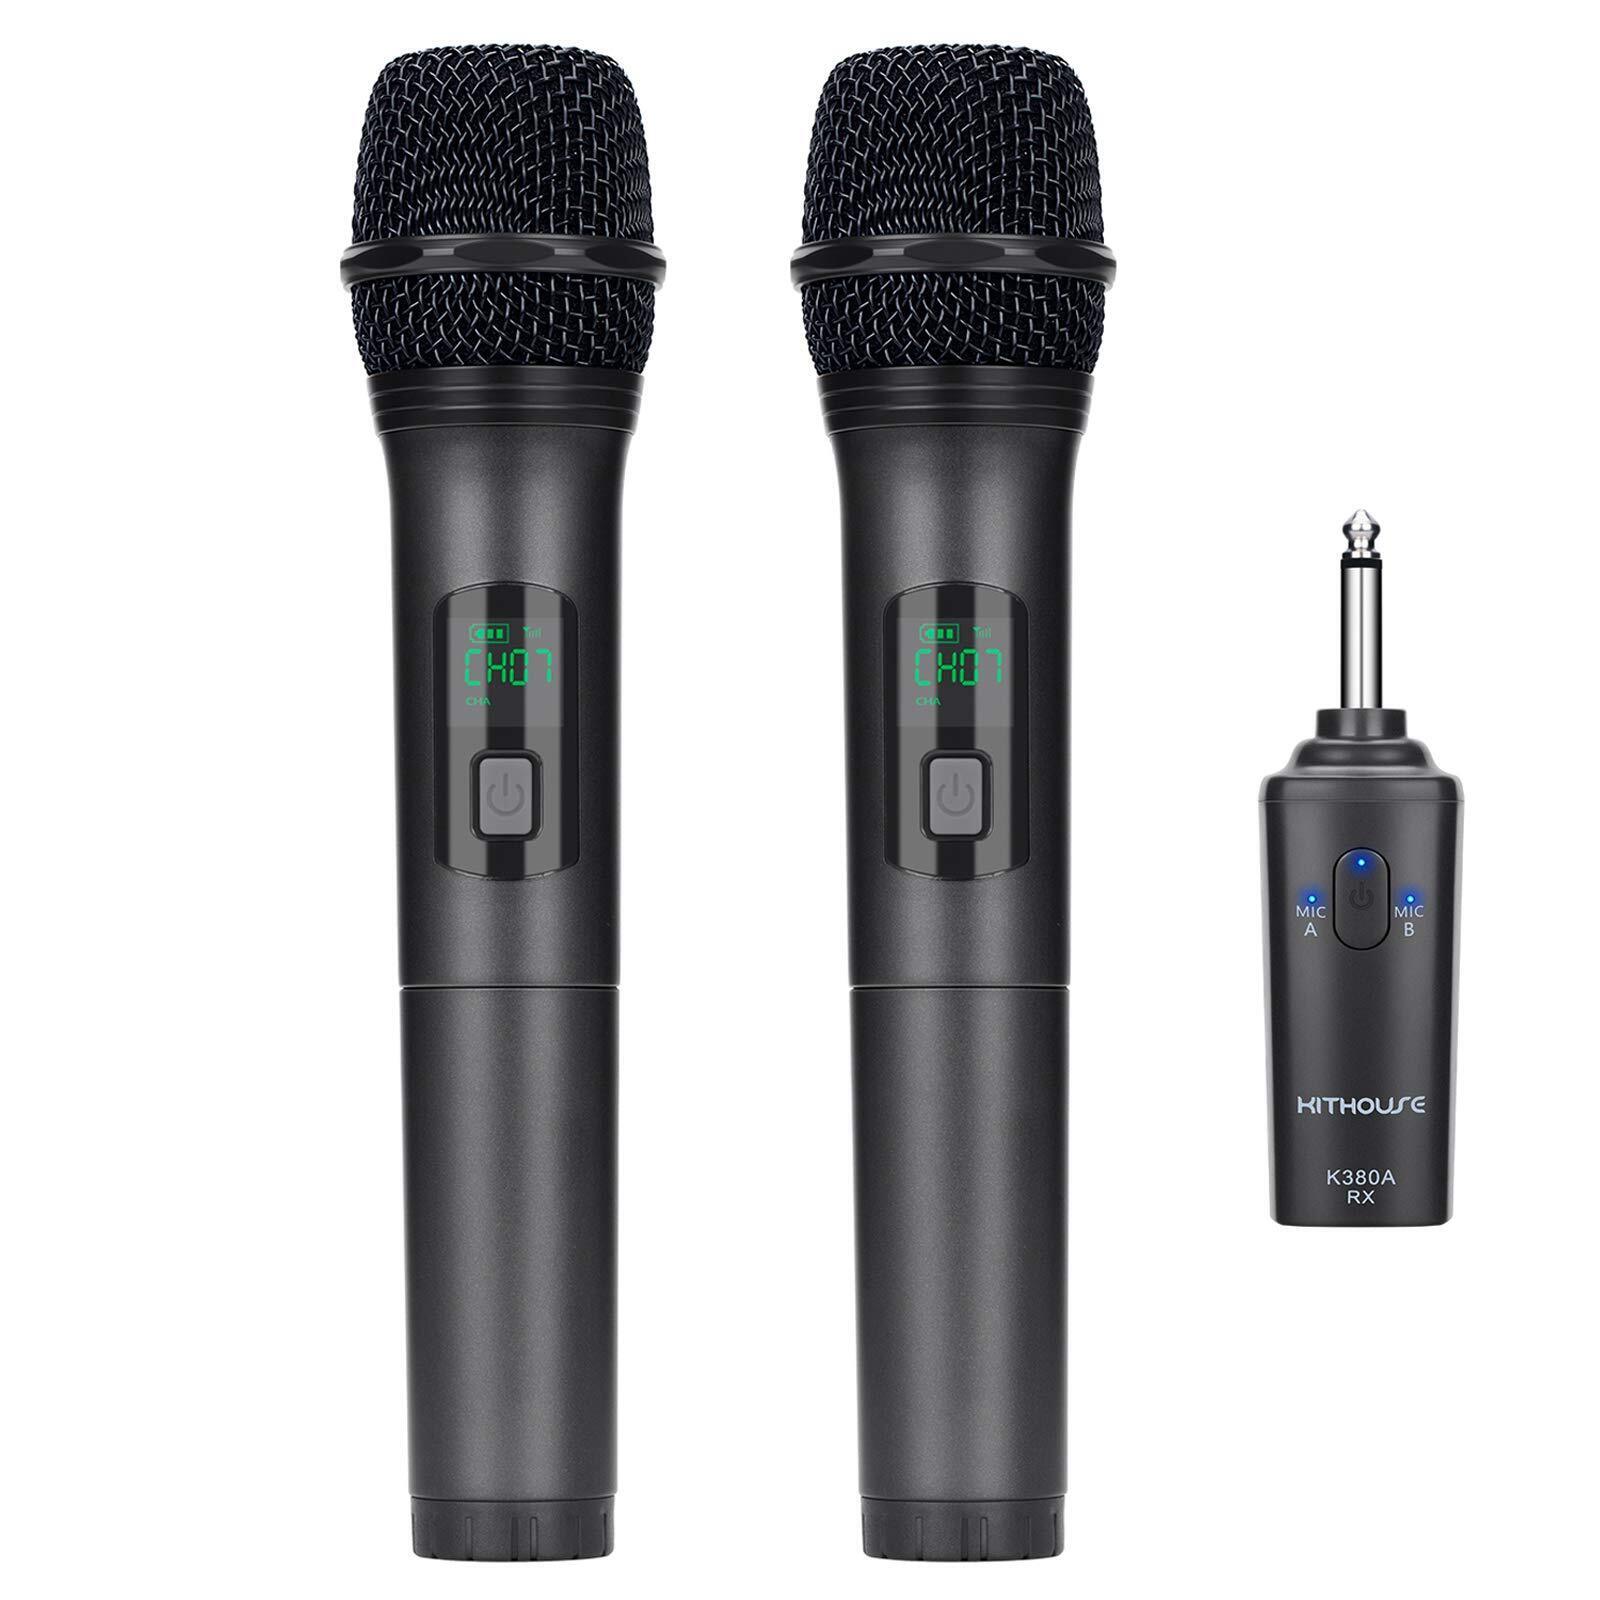 K380A Wireless Microphone Karaoke Microphone Wireless Mic Dual with Rechargea...